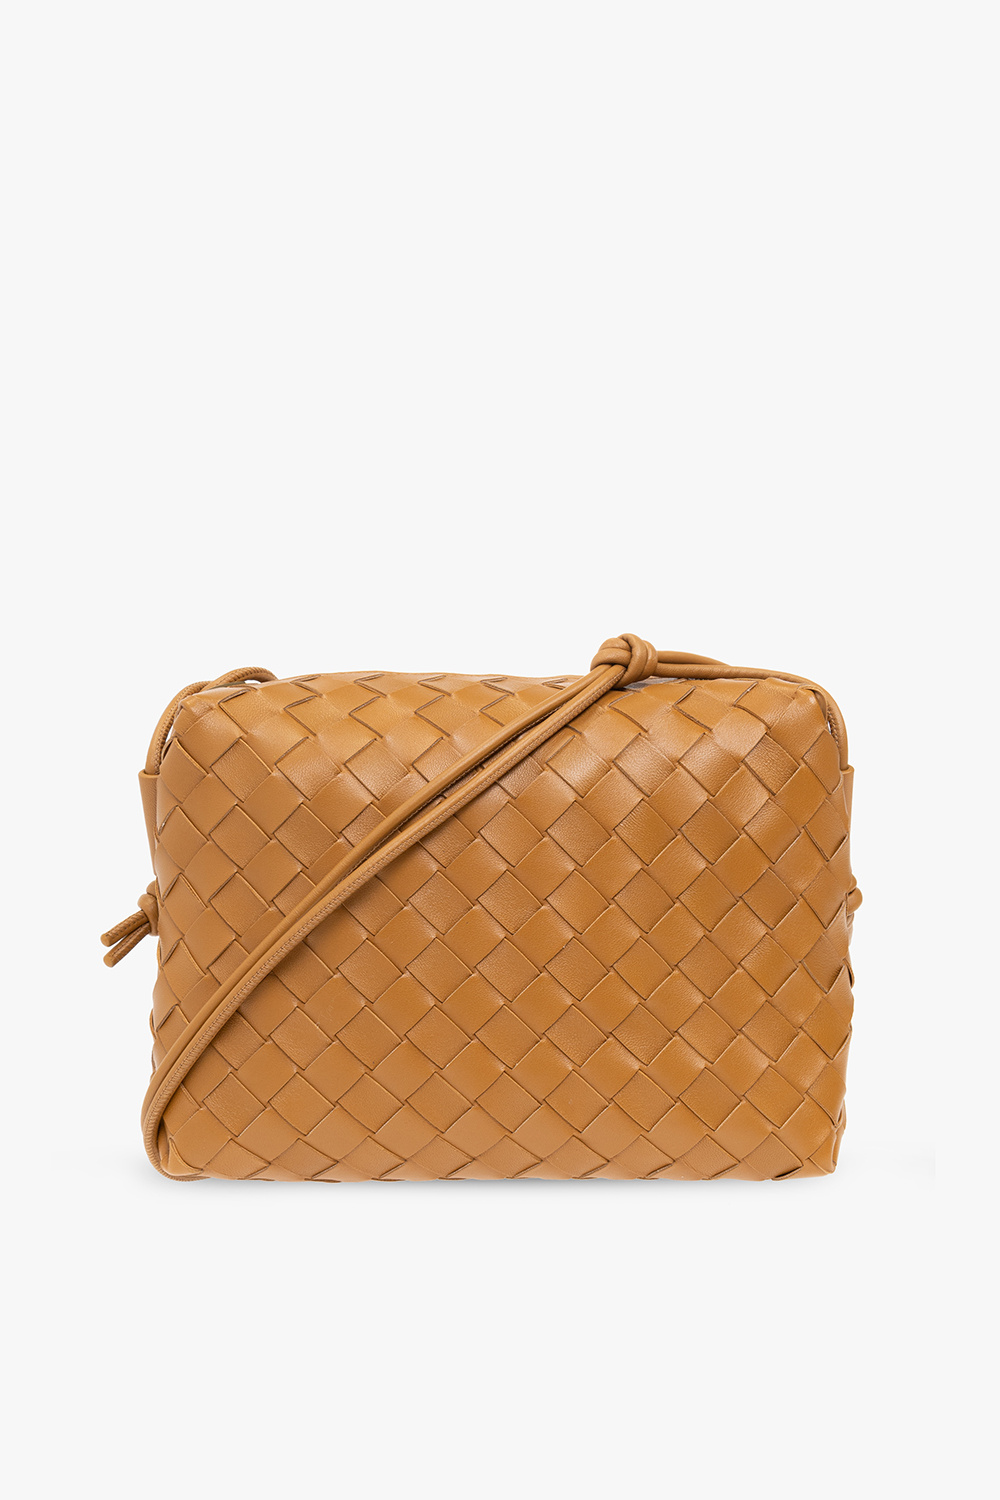 Bottega Veneta Loop Small Intrecciato Leather Shoulder Bag - Green - One Size